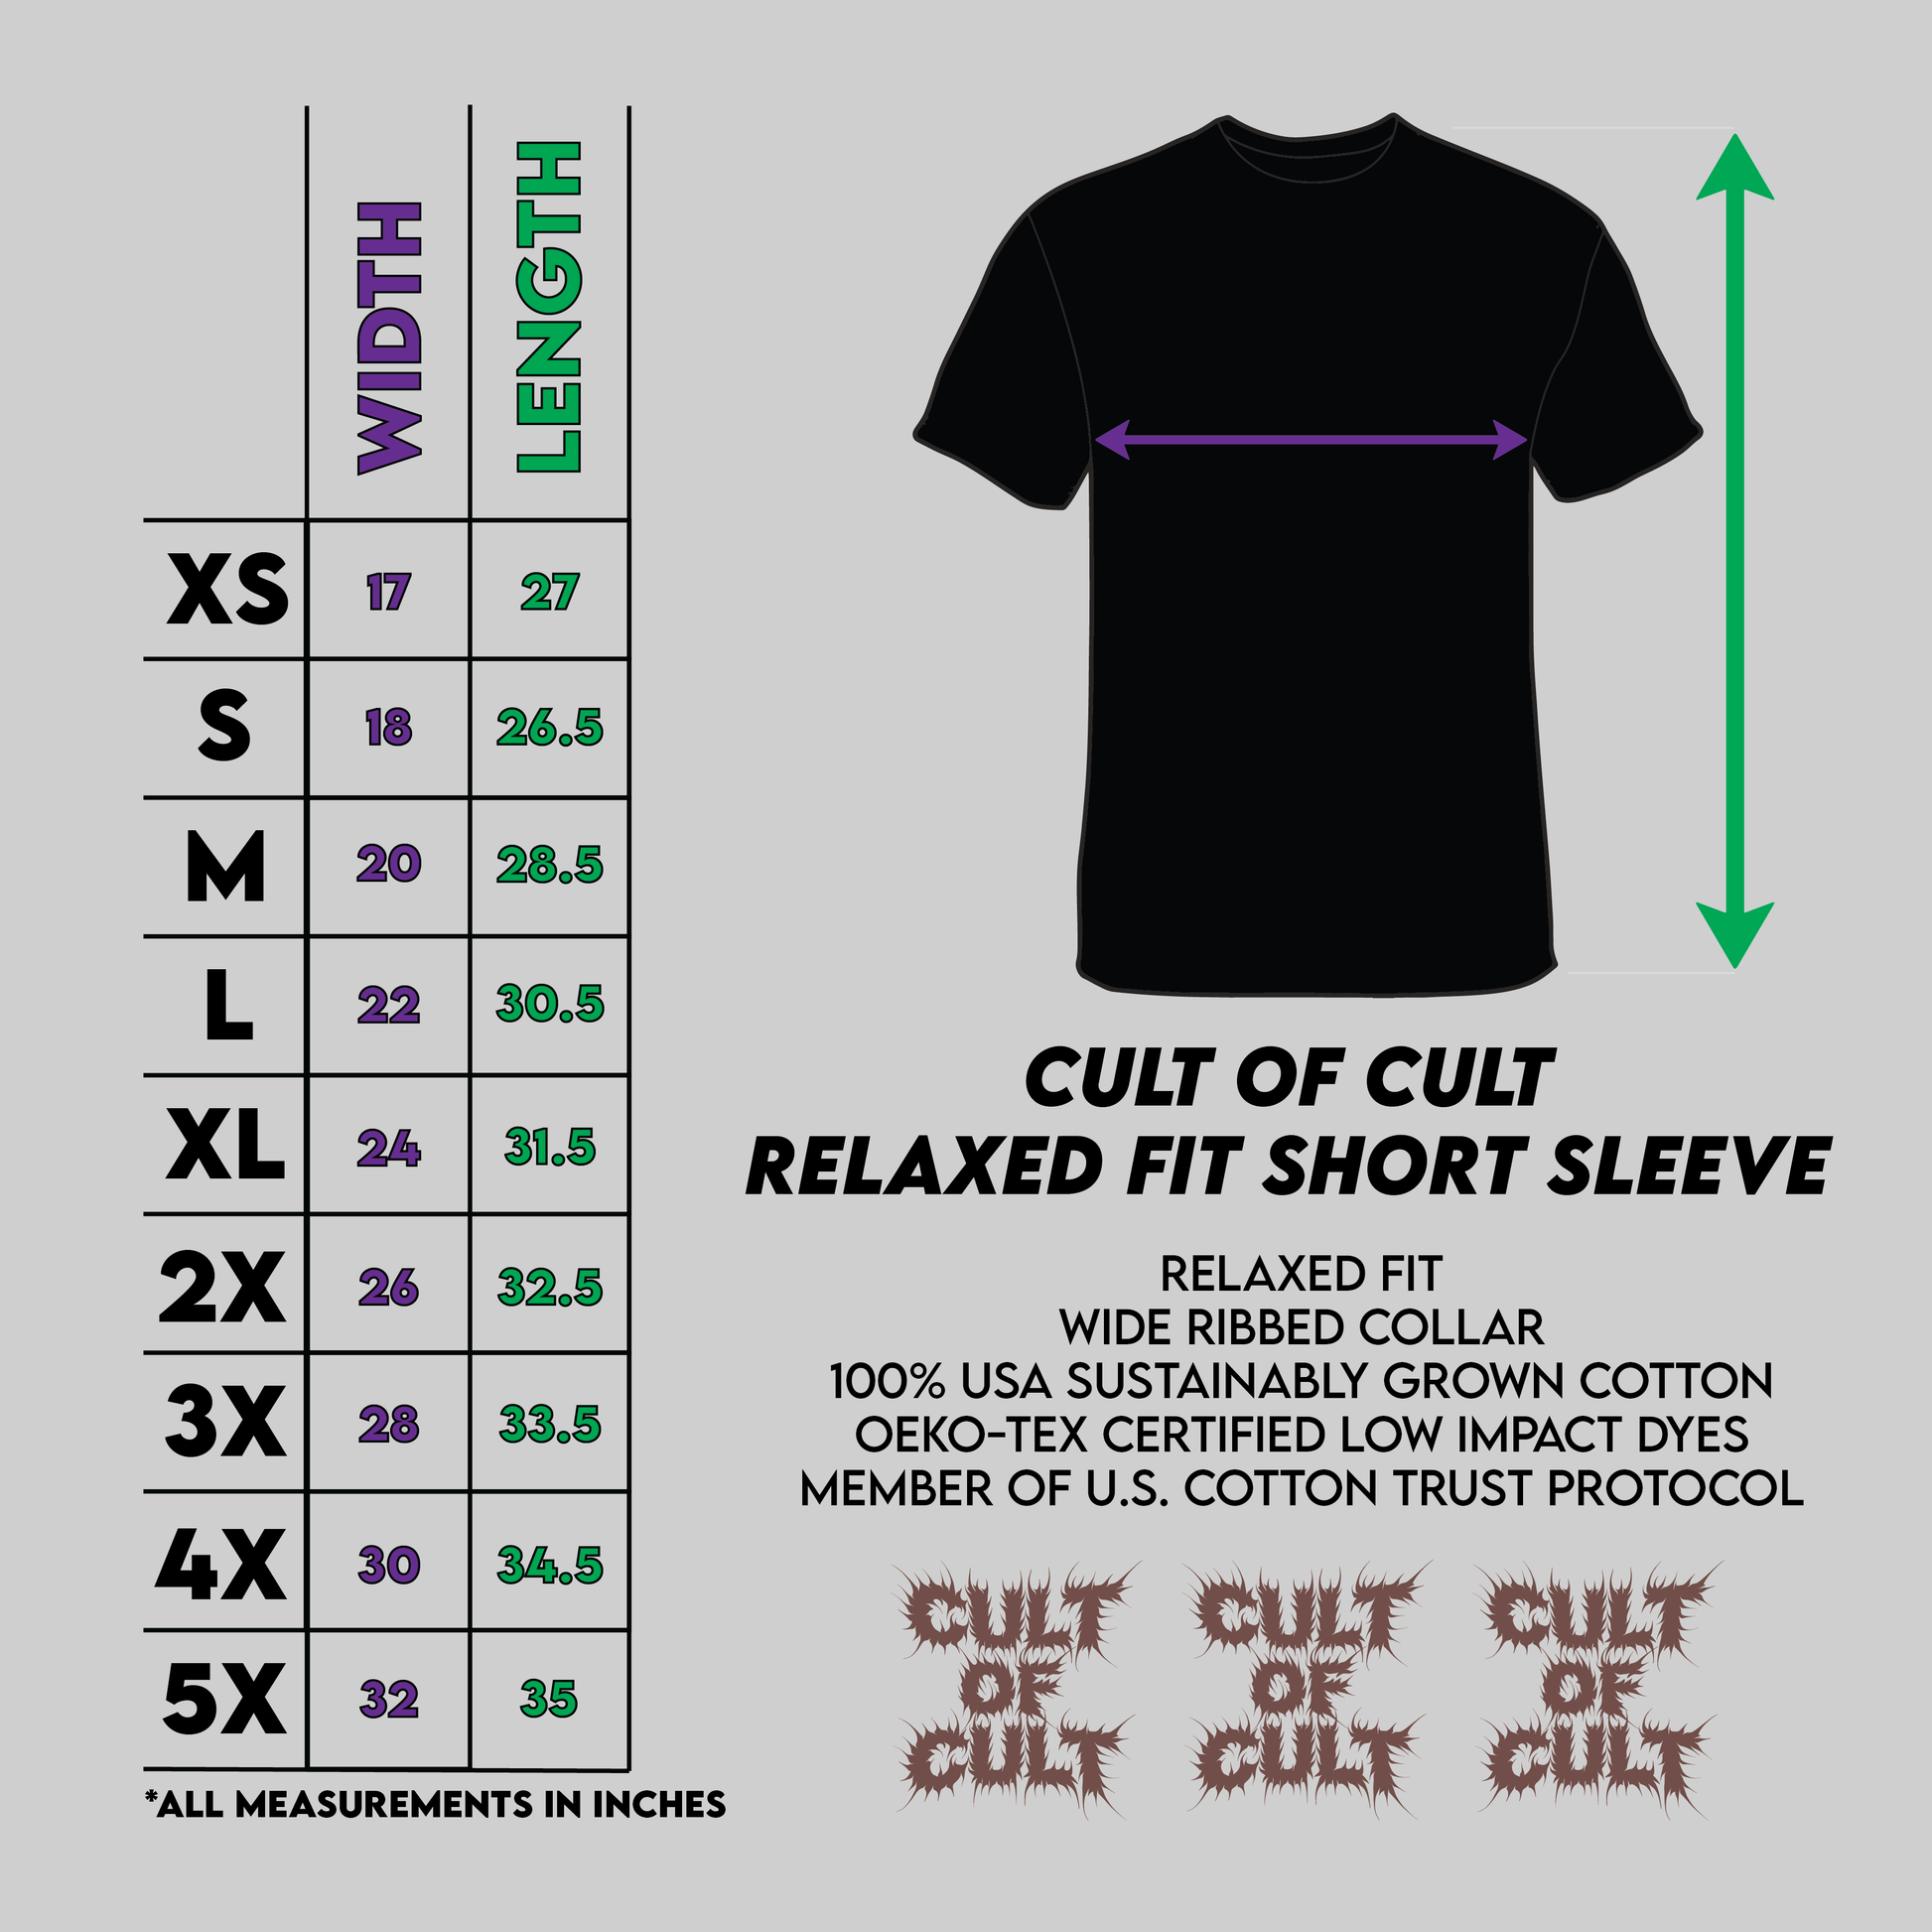 Cult of Cult short sleeve shirt size chart